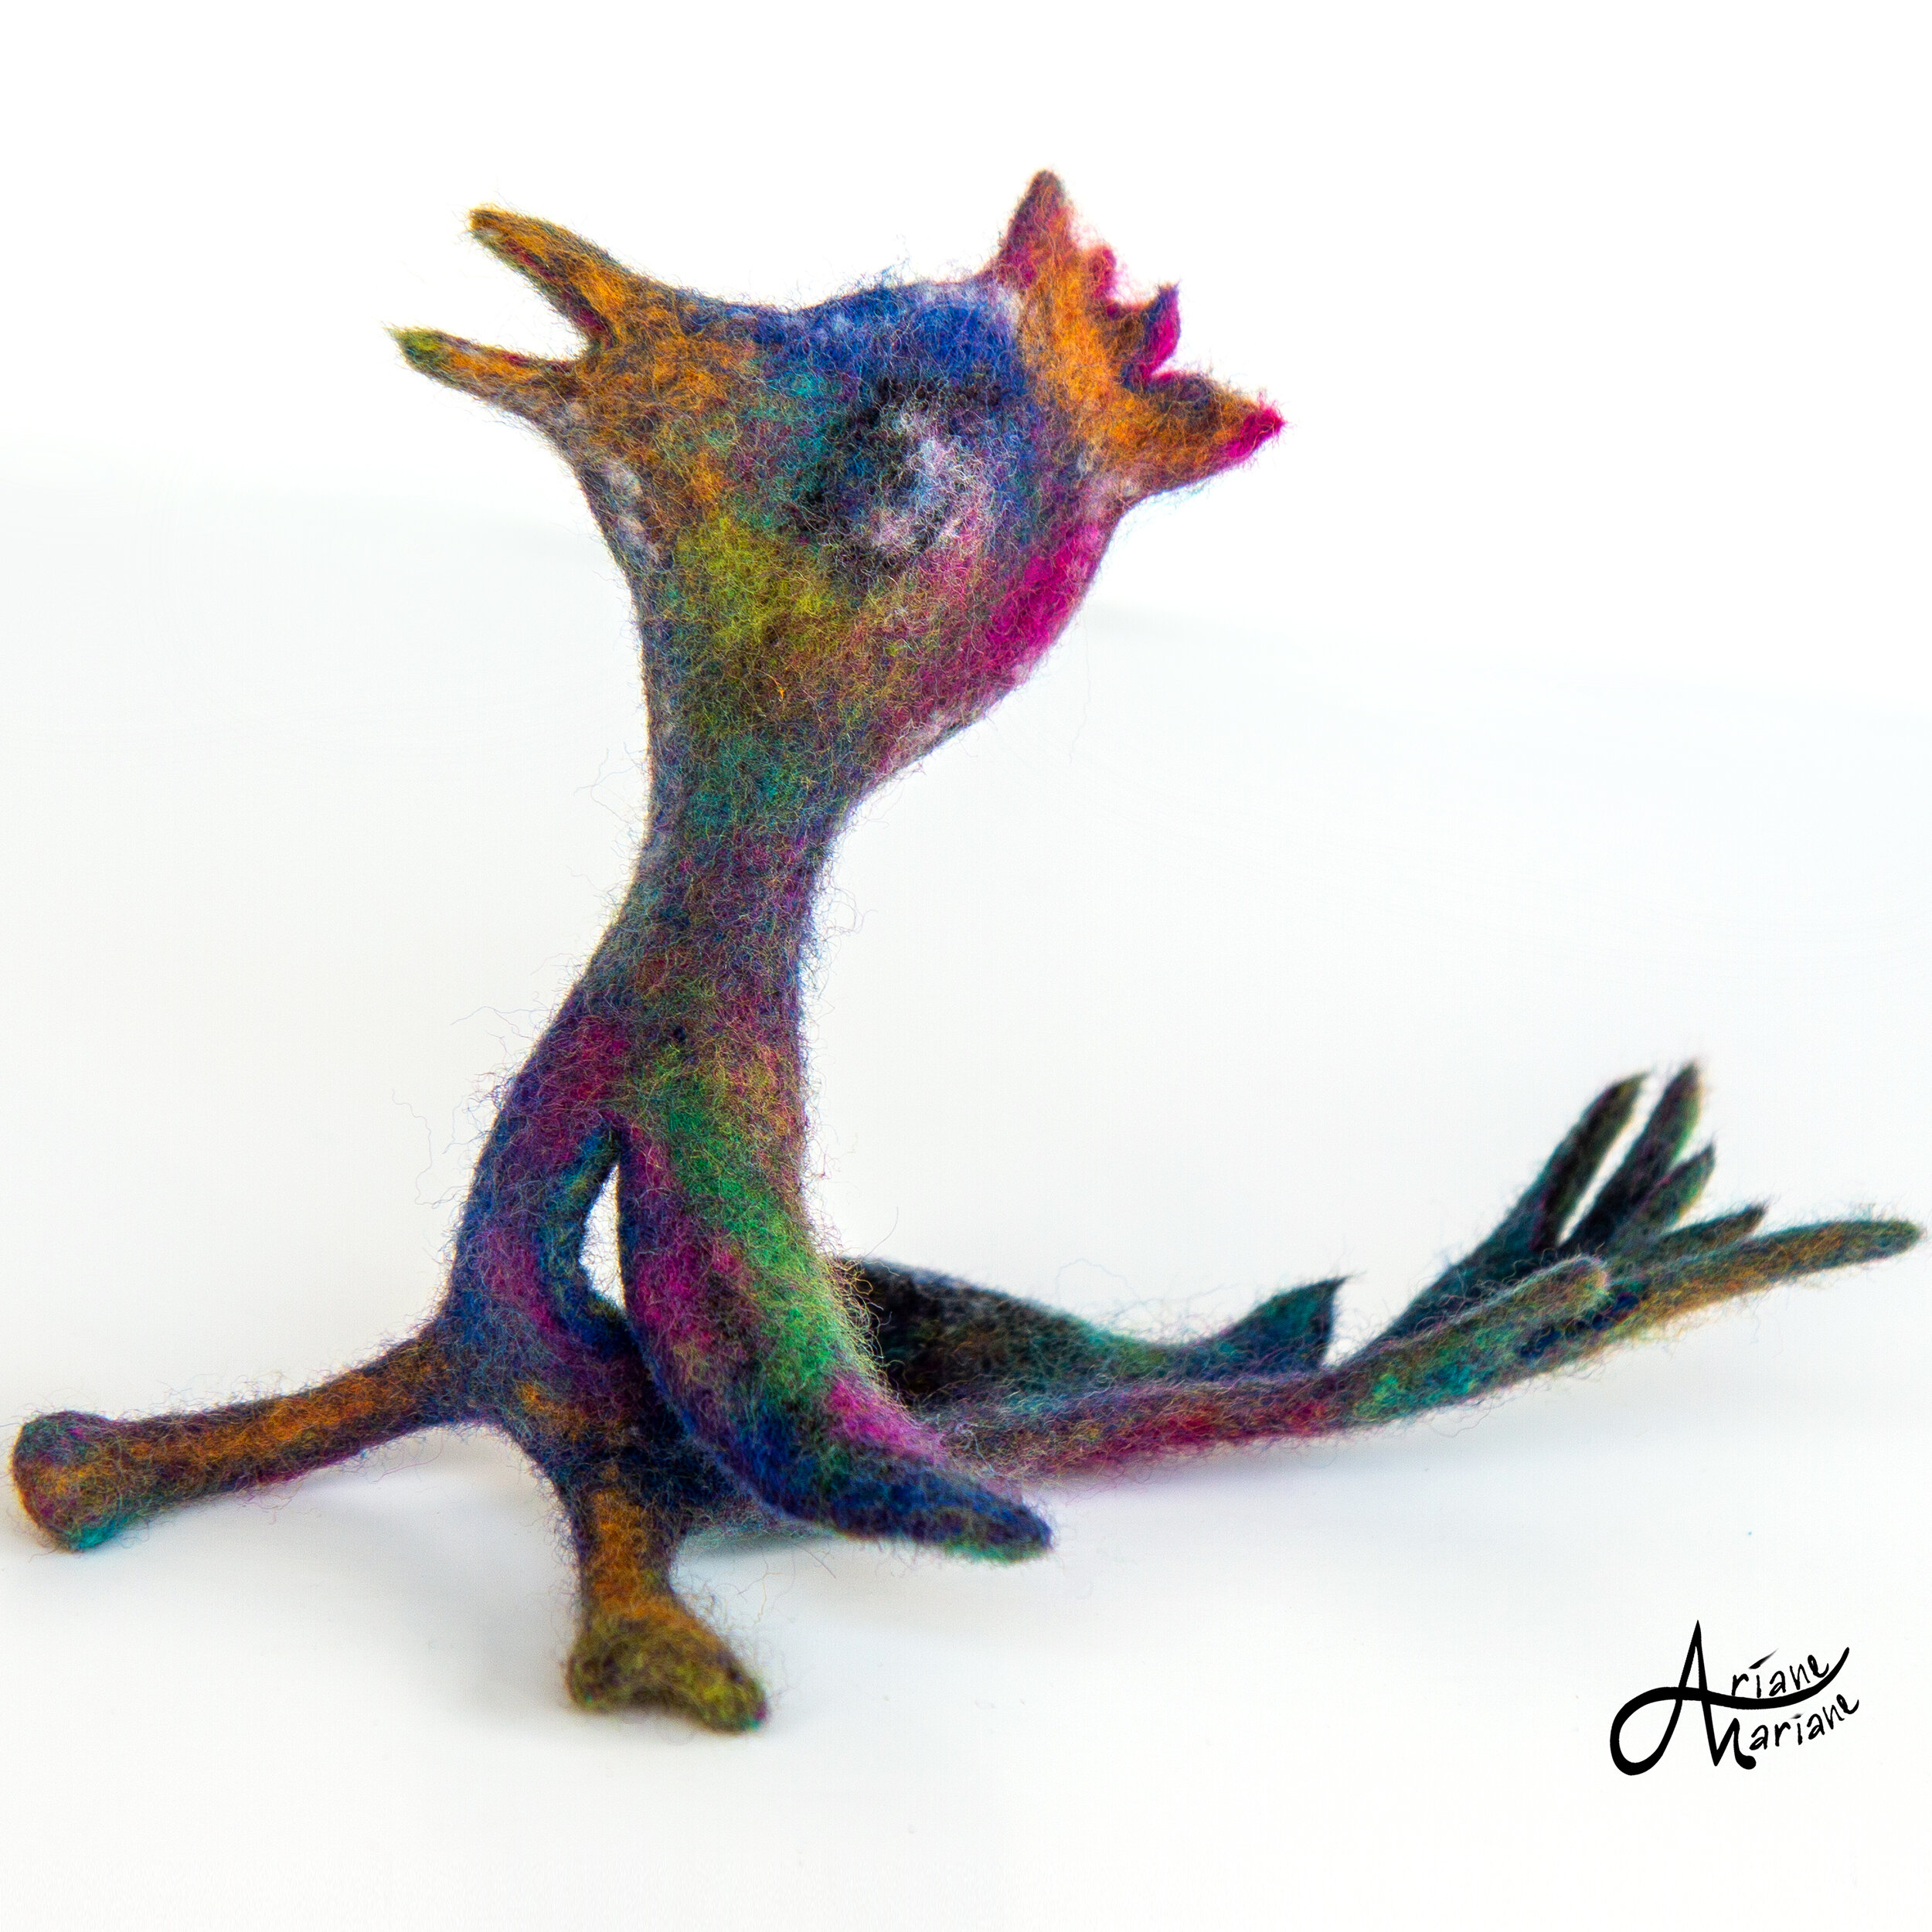 Multicolored-felt-art-bird-sculpture-ariane-mariane-5438.jpg